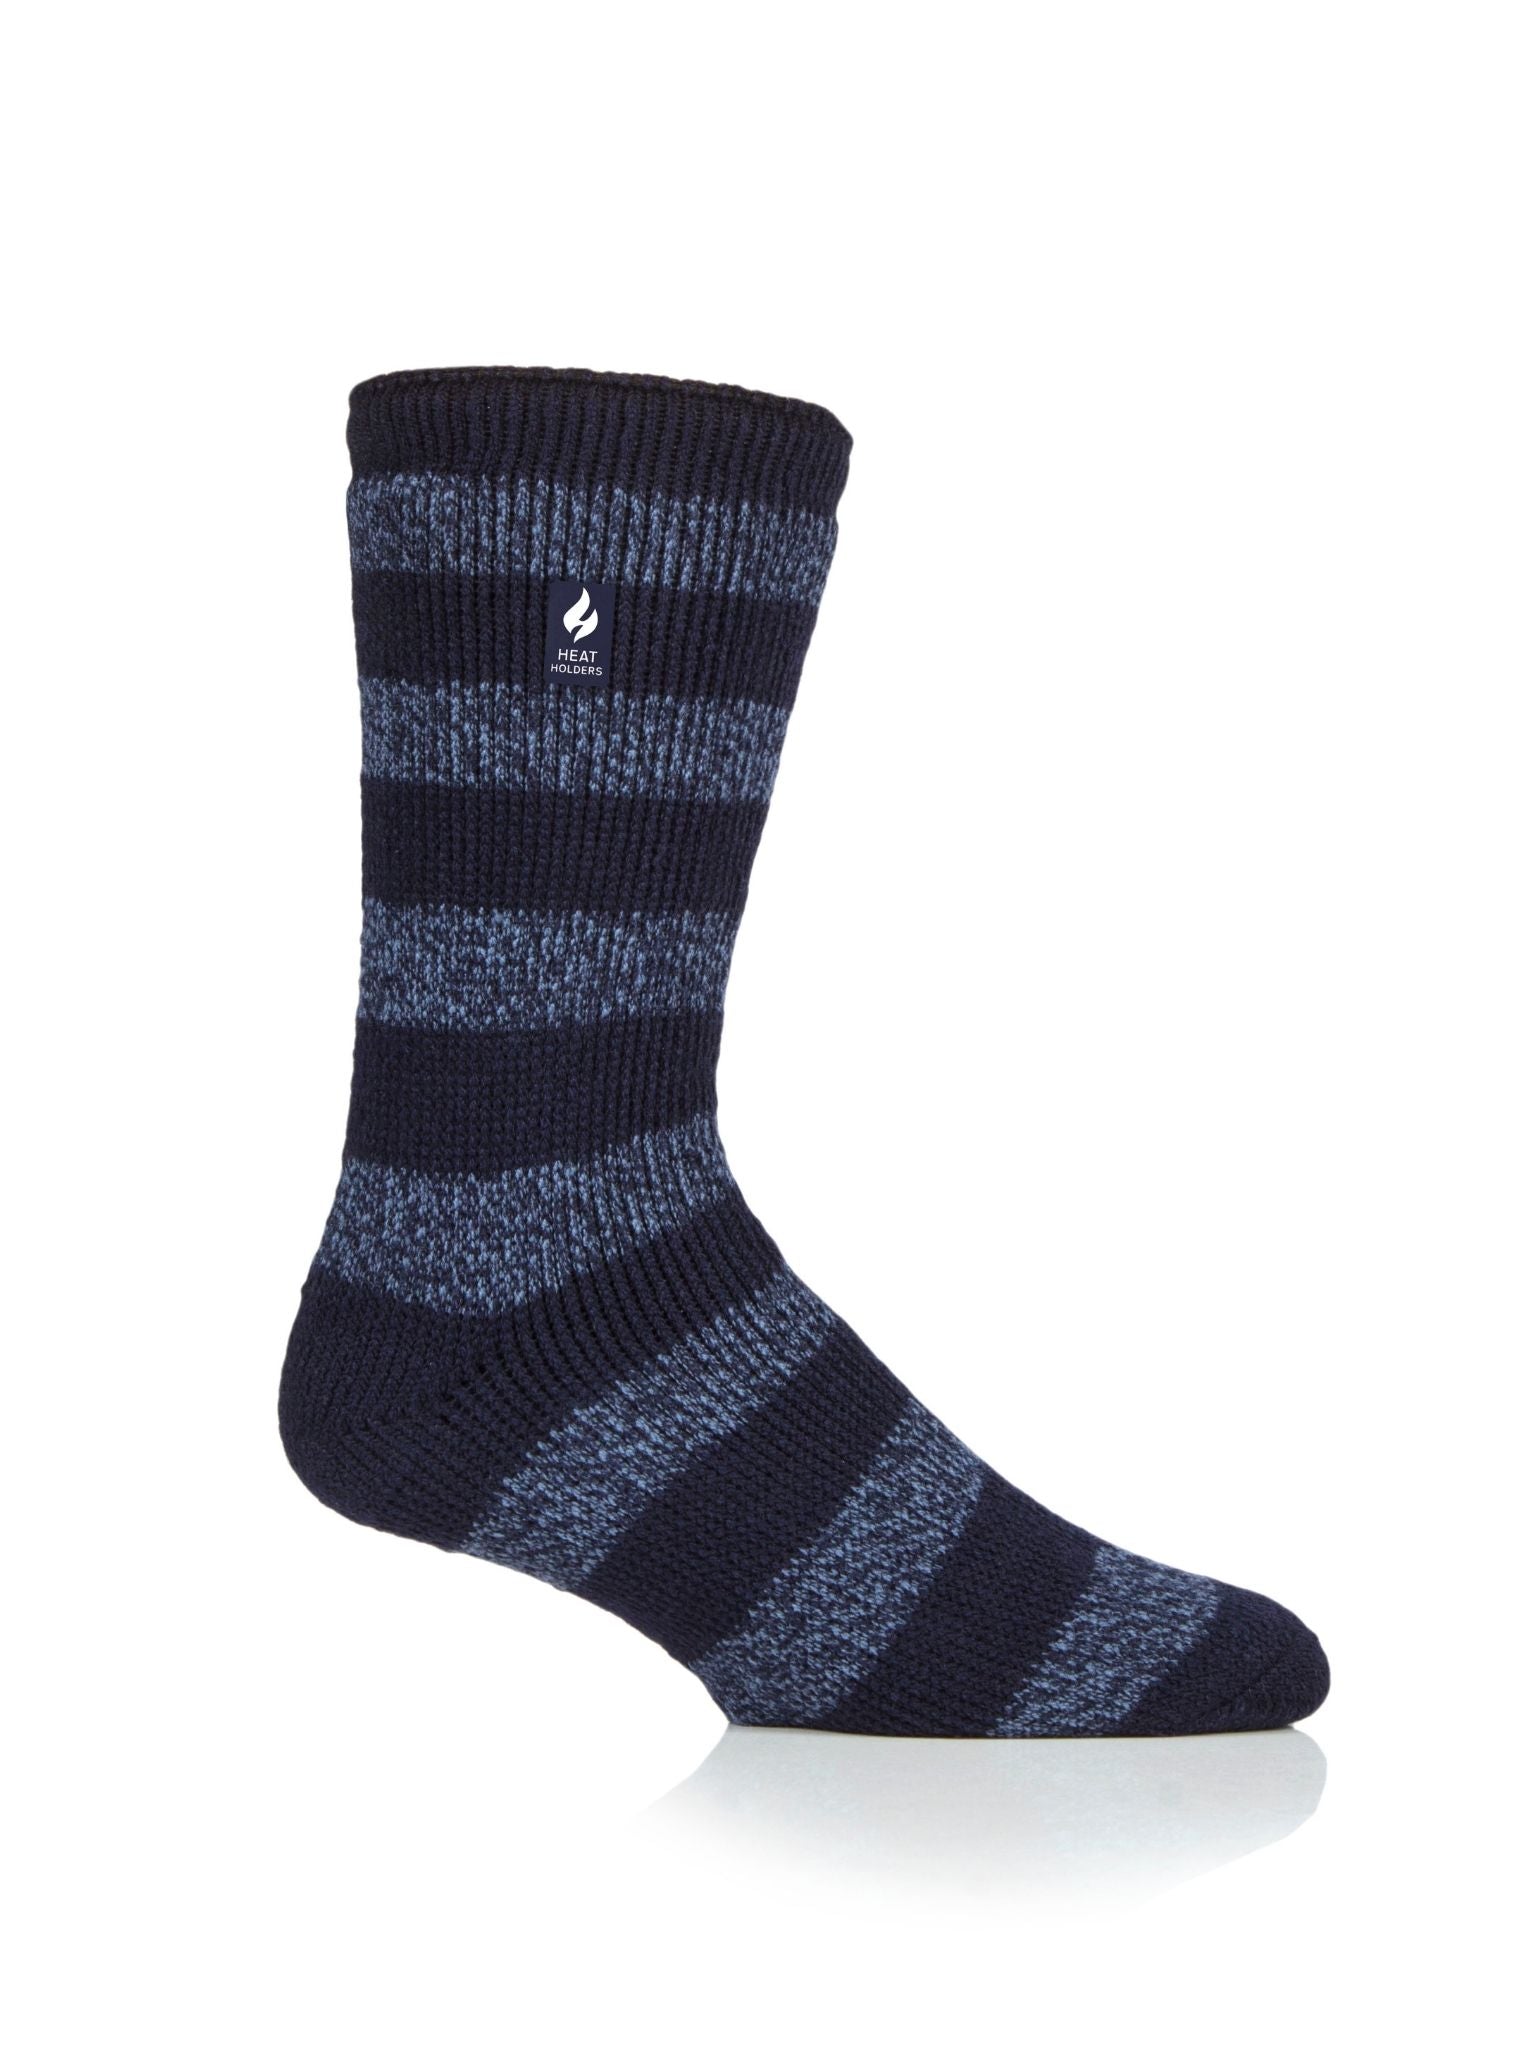 HEAT HOLDERS Original Ultimate Thermal Slipper Socks - Men's